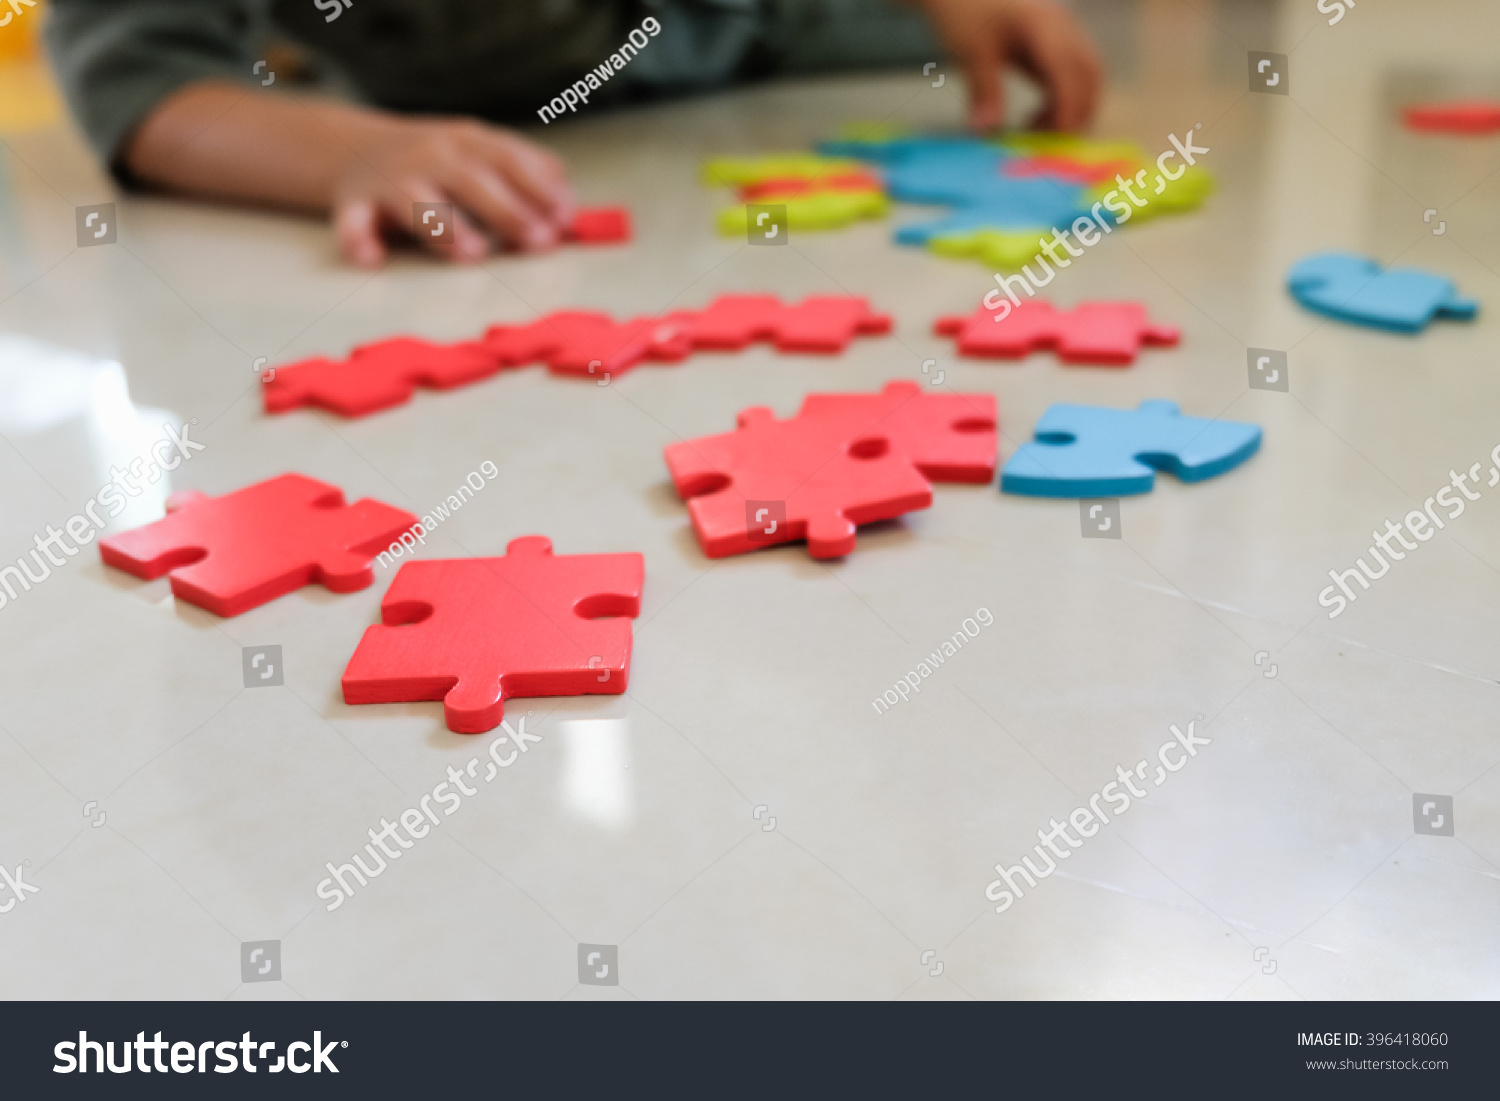 Jigsaw puzzle pieces, background concept #396418060